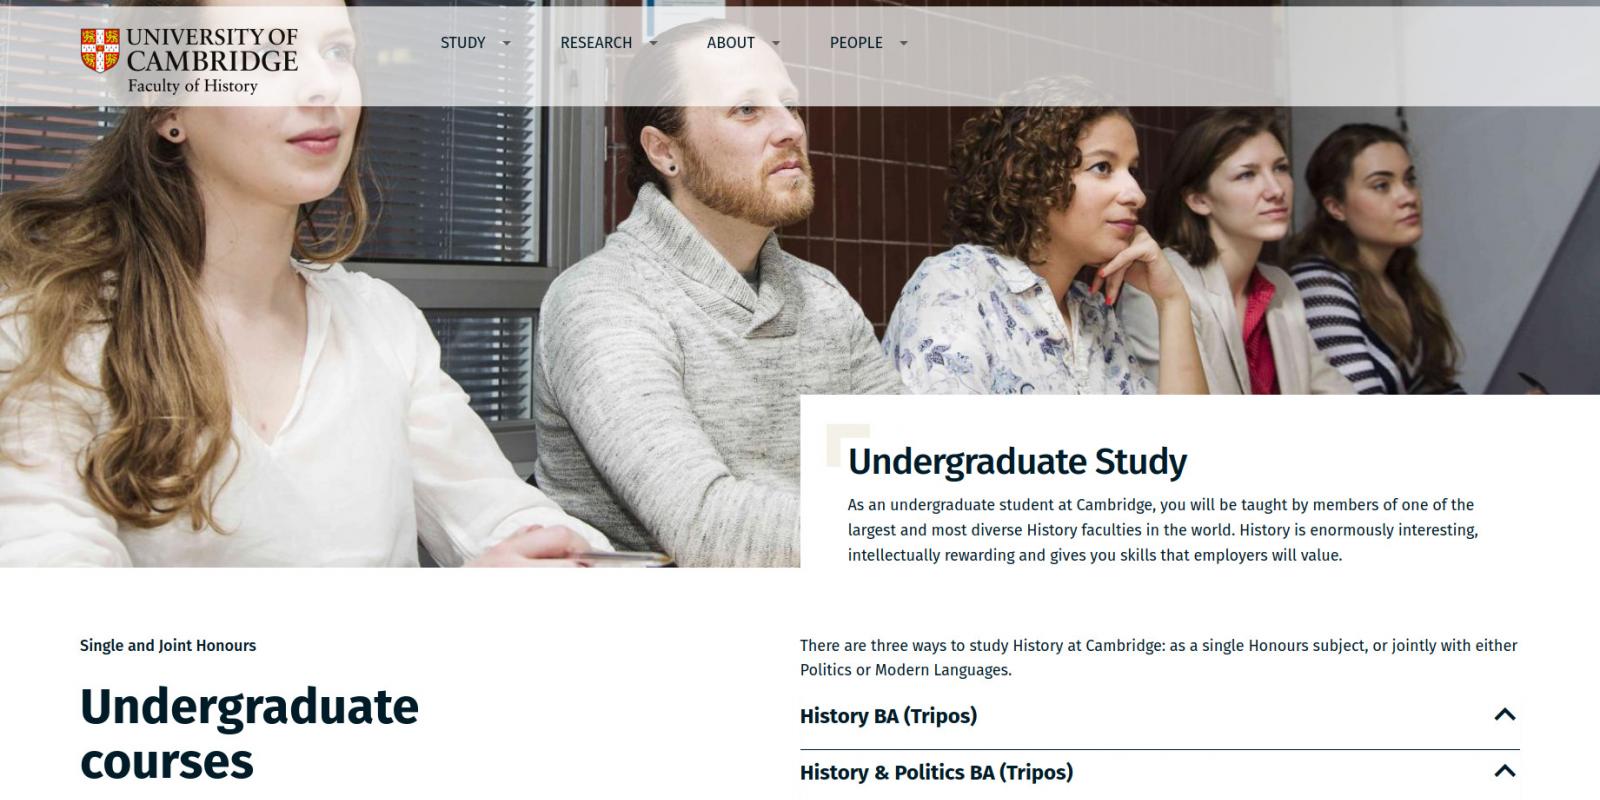 Faculty of History - University of Cambridge - website undergraduate study page